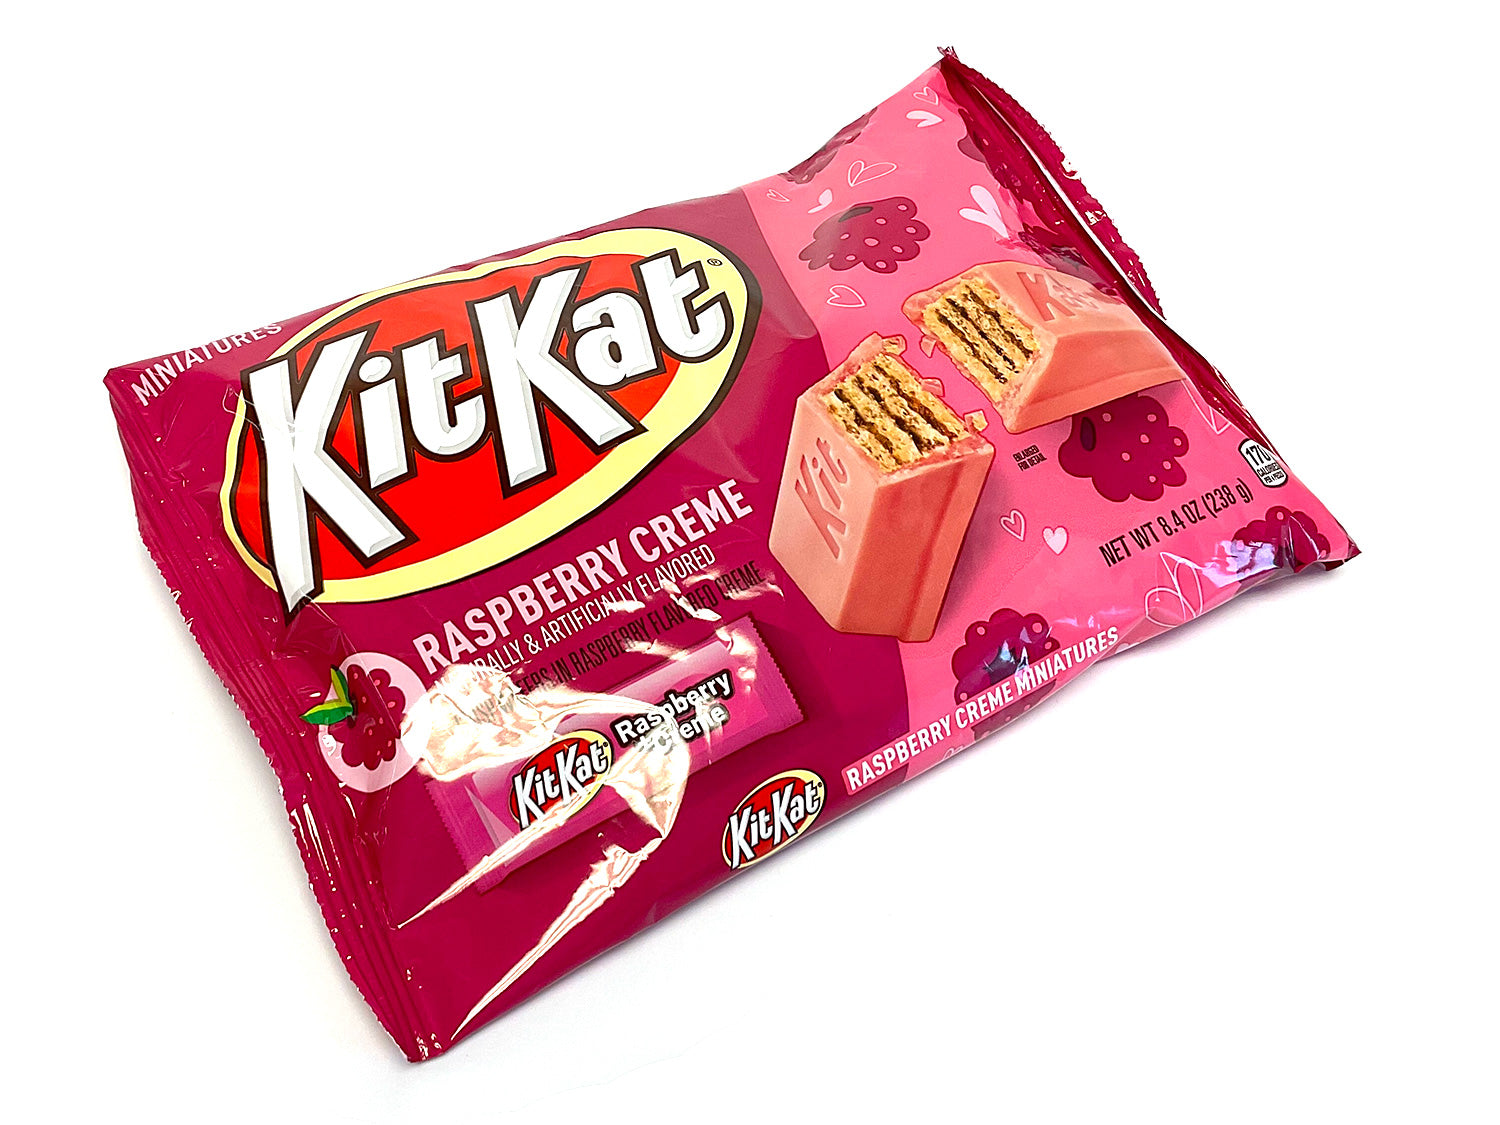 Kit Kat Raspberry & Creme - 8.4 oz bag